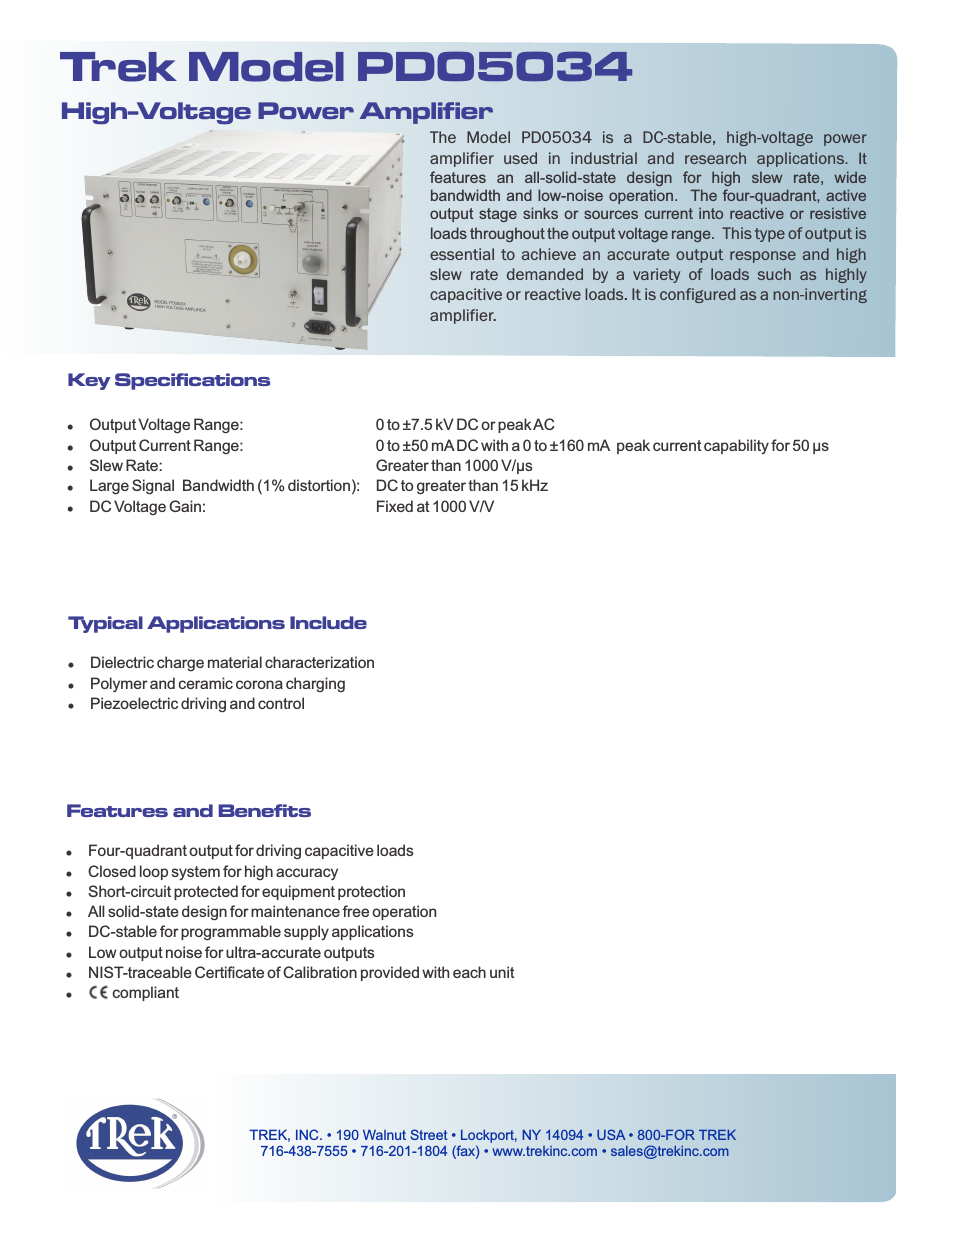 PD05034 High-Voltage Power Amplifier